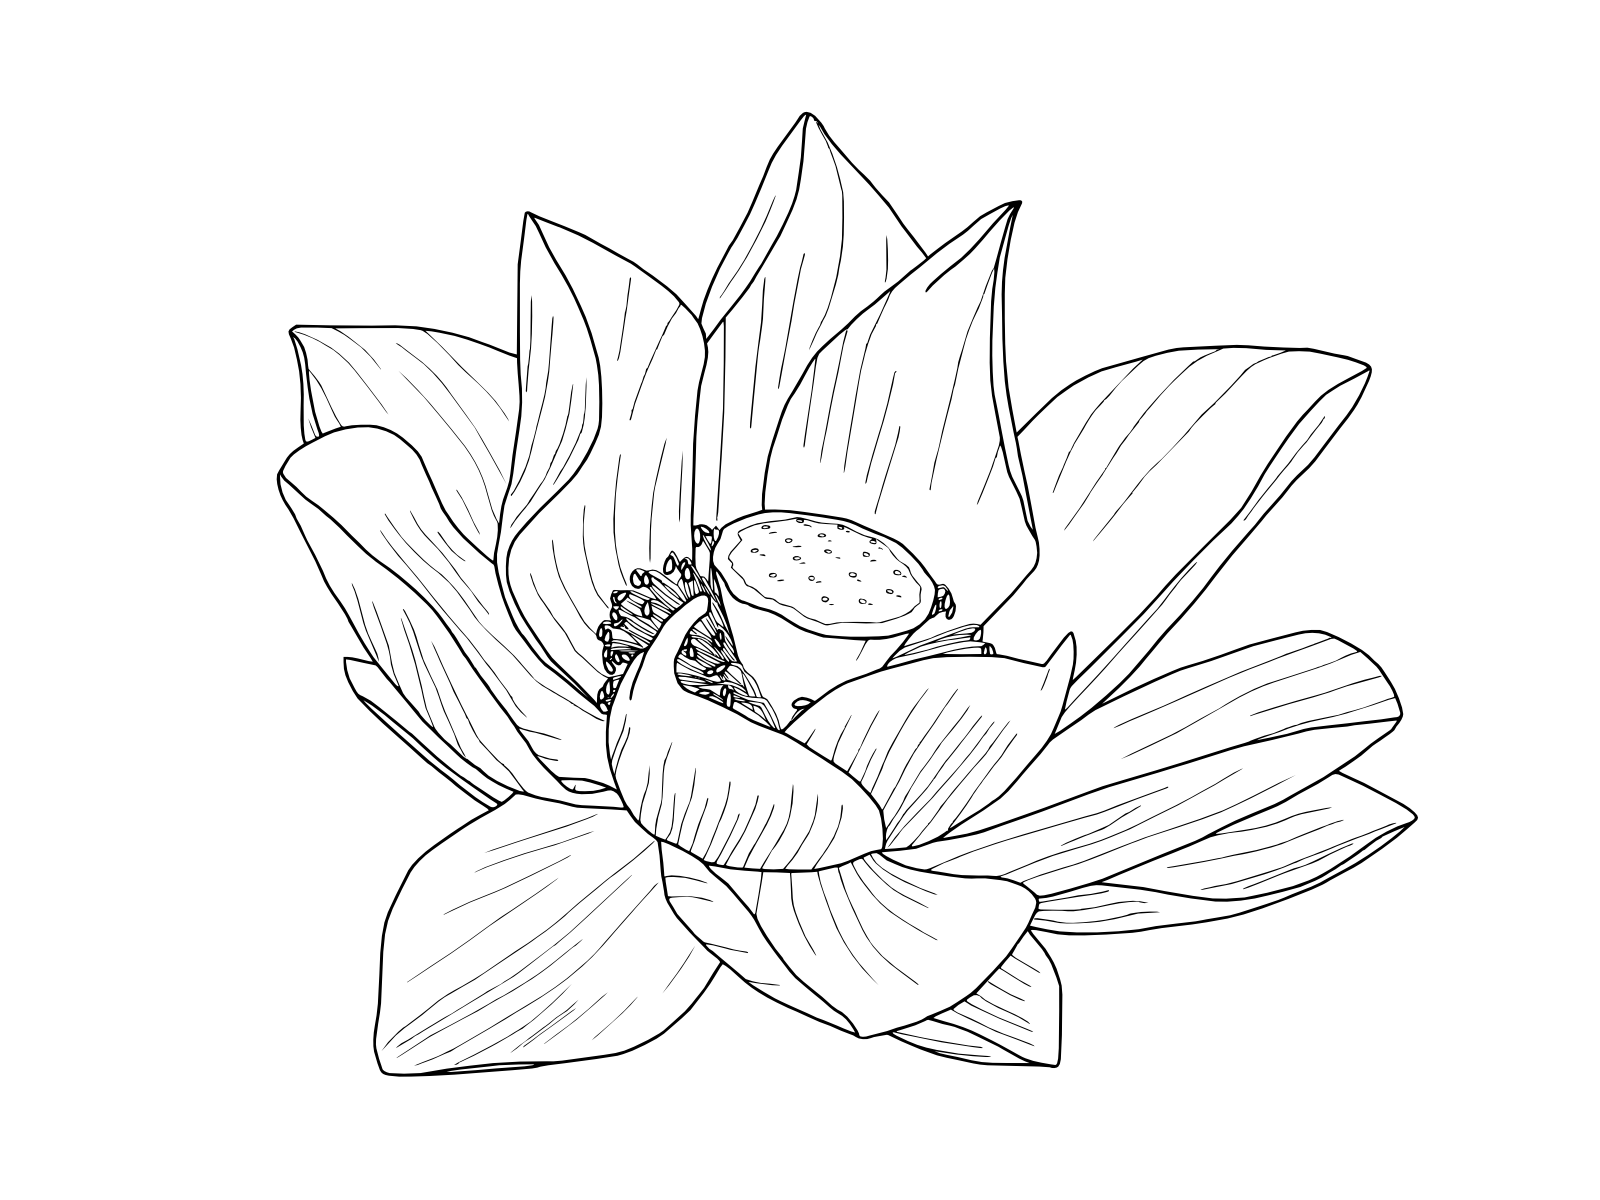 Flower drawing png. Eleletsitz transparent tumblr images